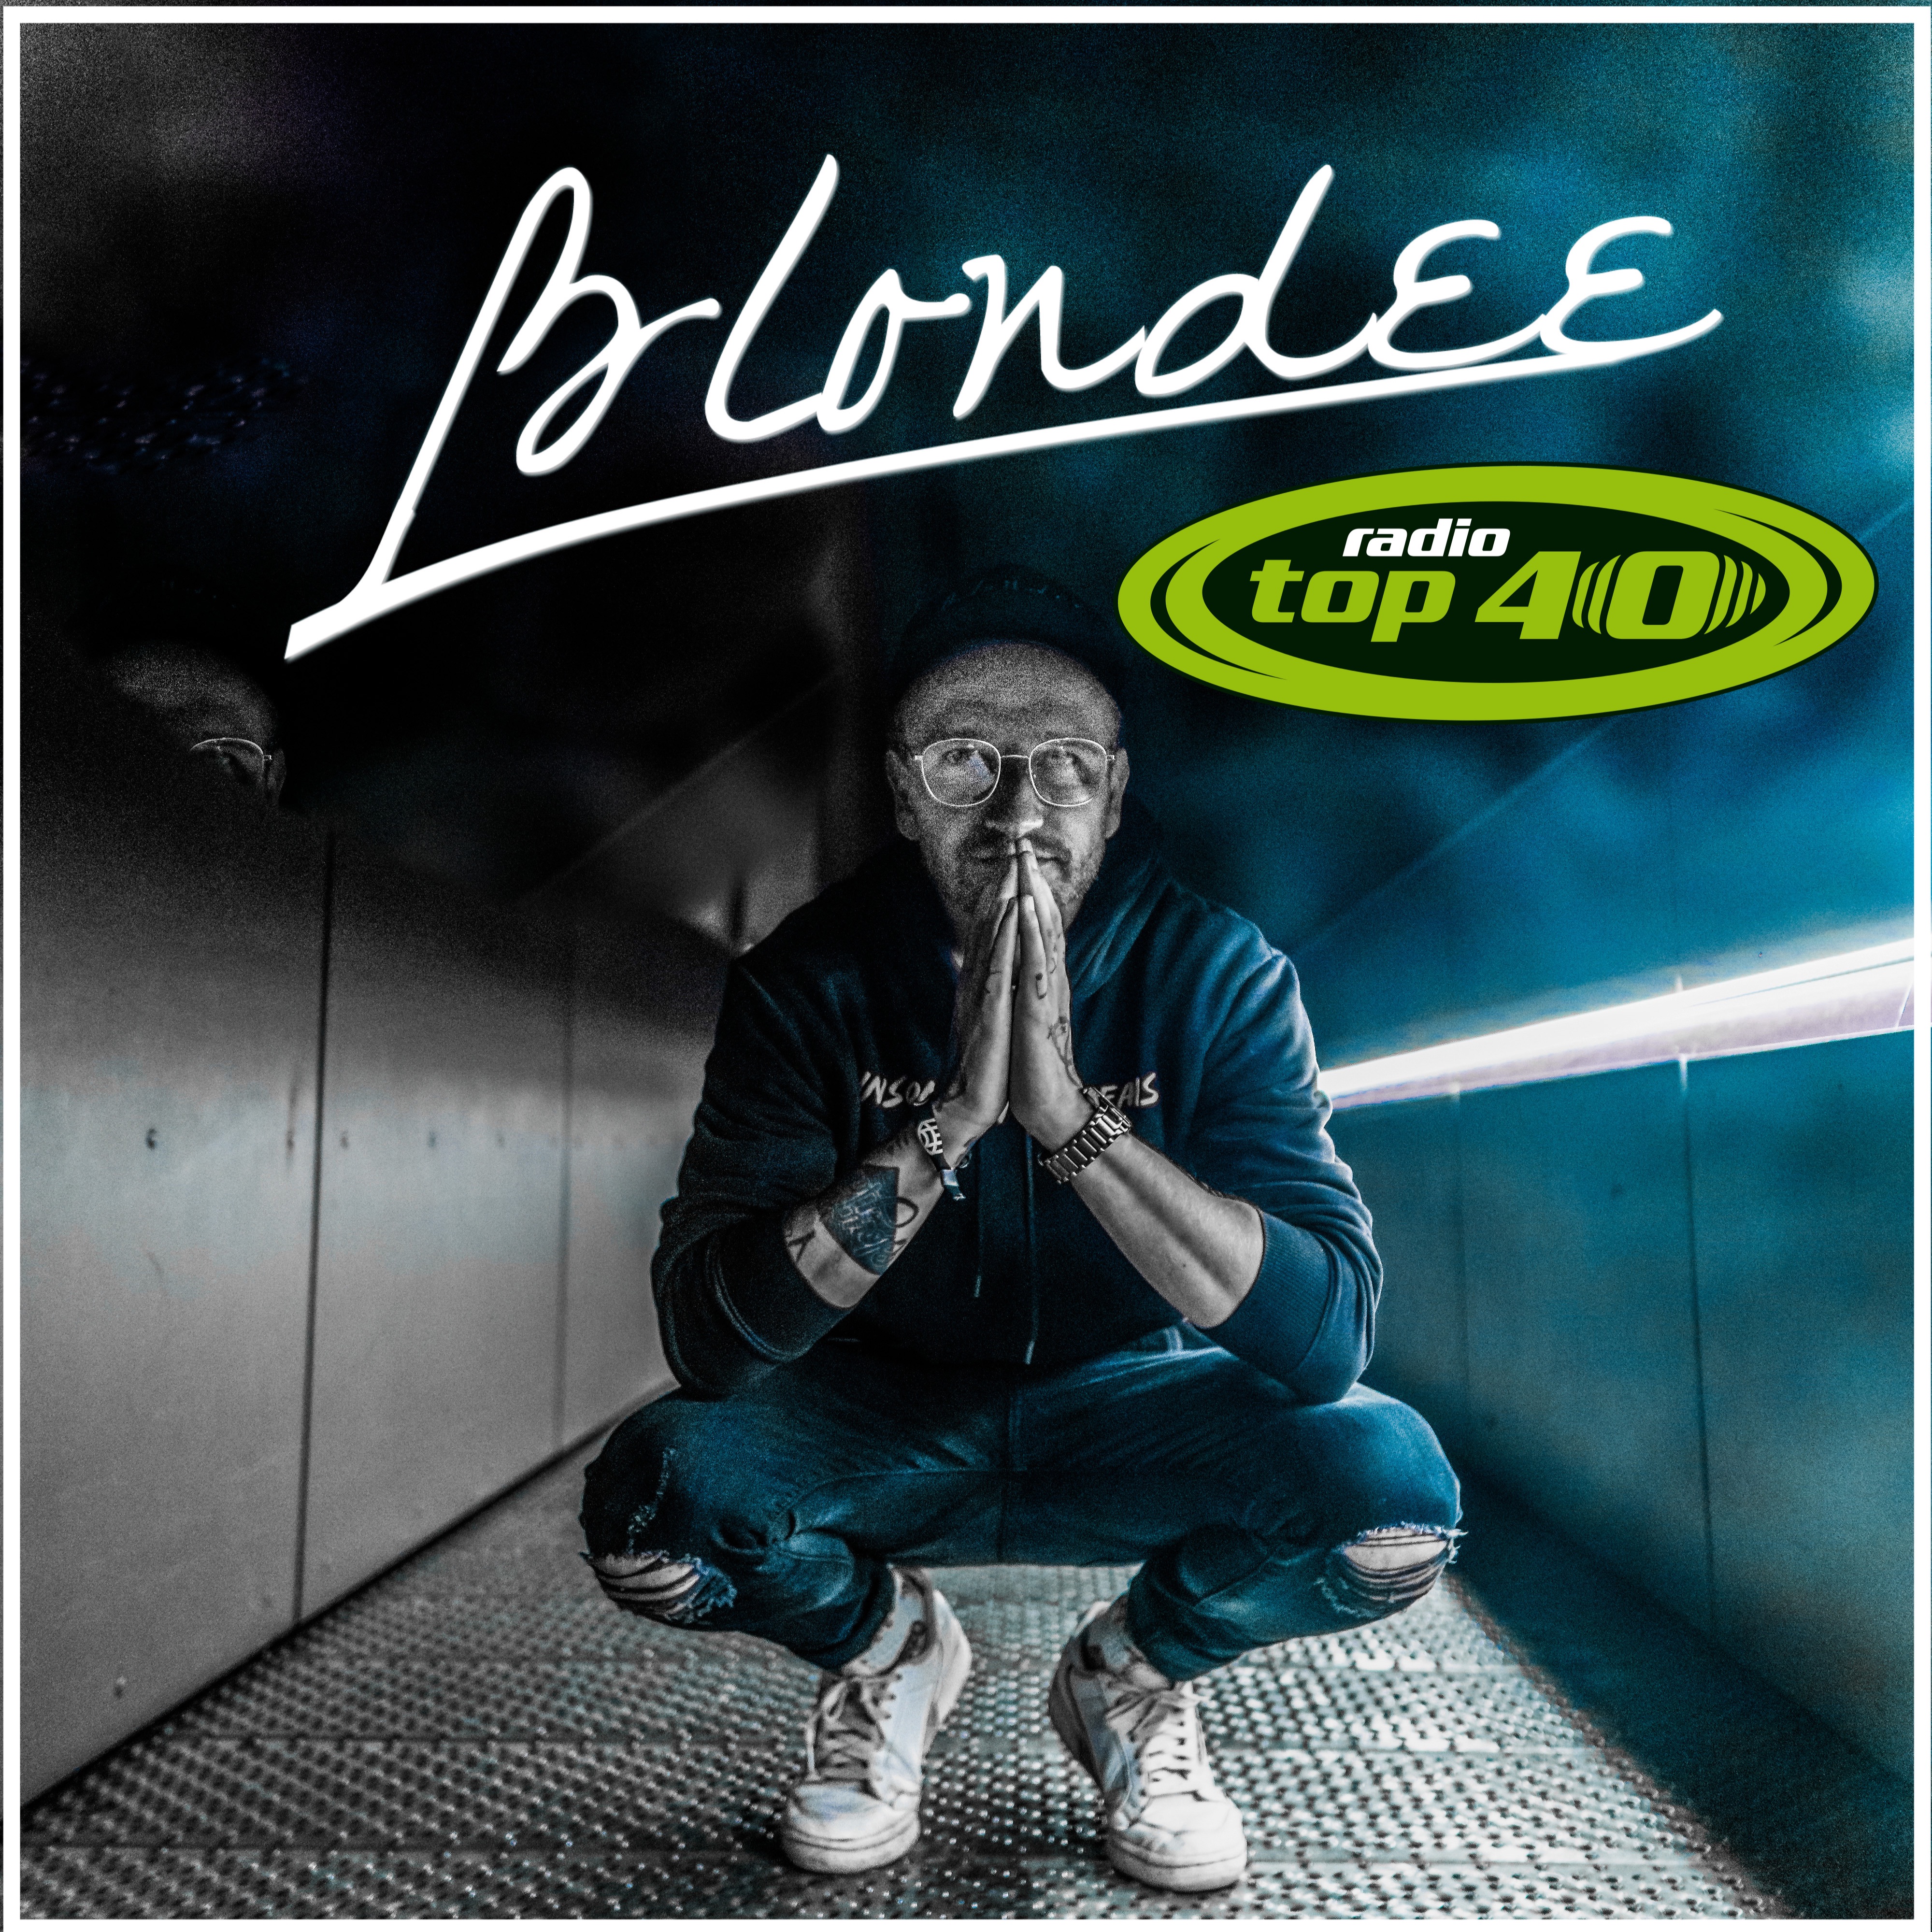 Blondee @ Radio Top 40 - New Year Mix 2021